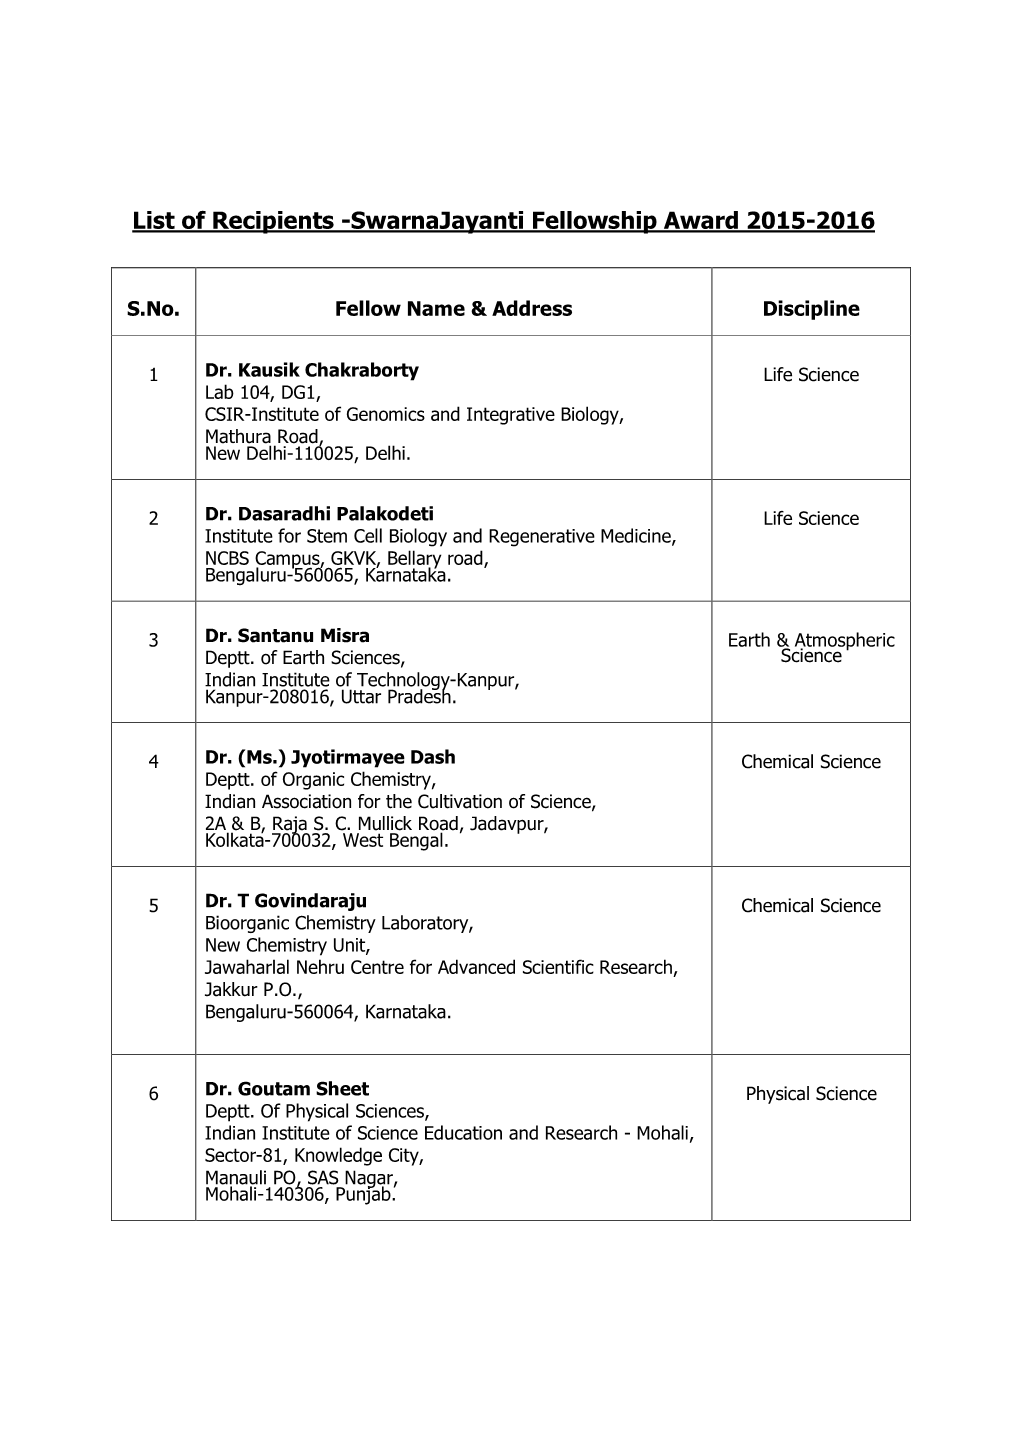 List of Recipients -Swarnajayanti Fellowship Award 2015-2016